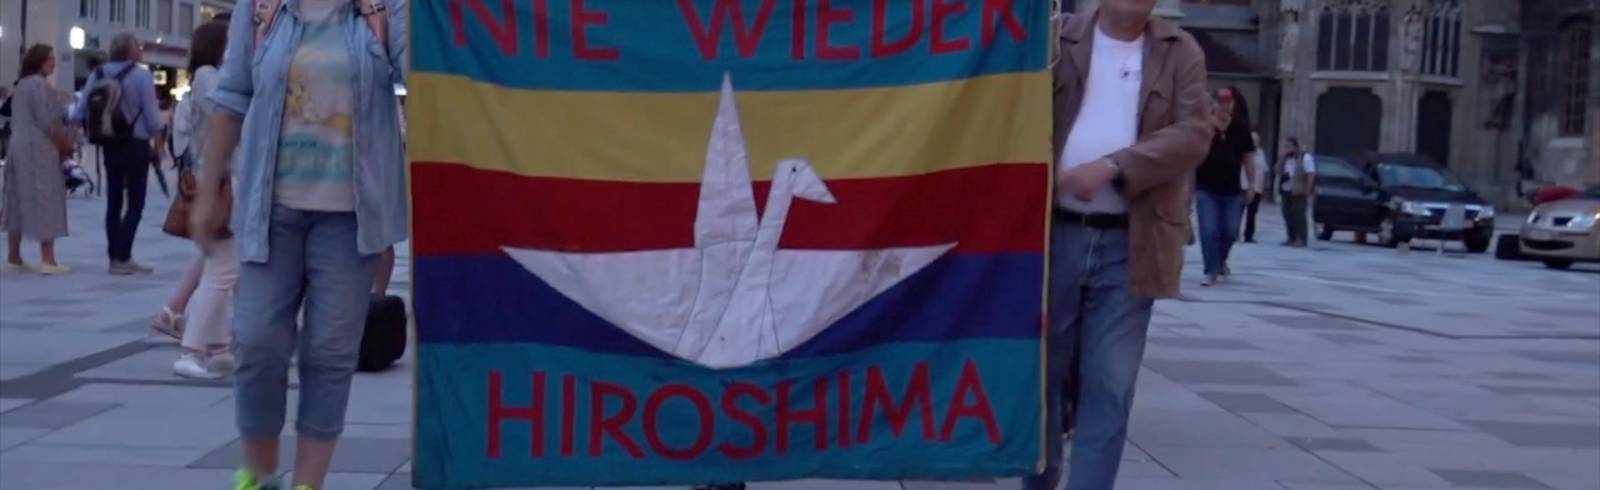 Bezirksflash: Hiroshima-Jahrestag